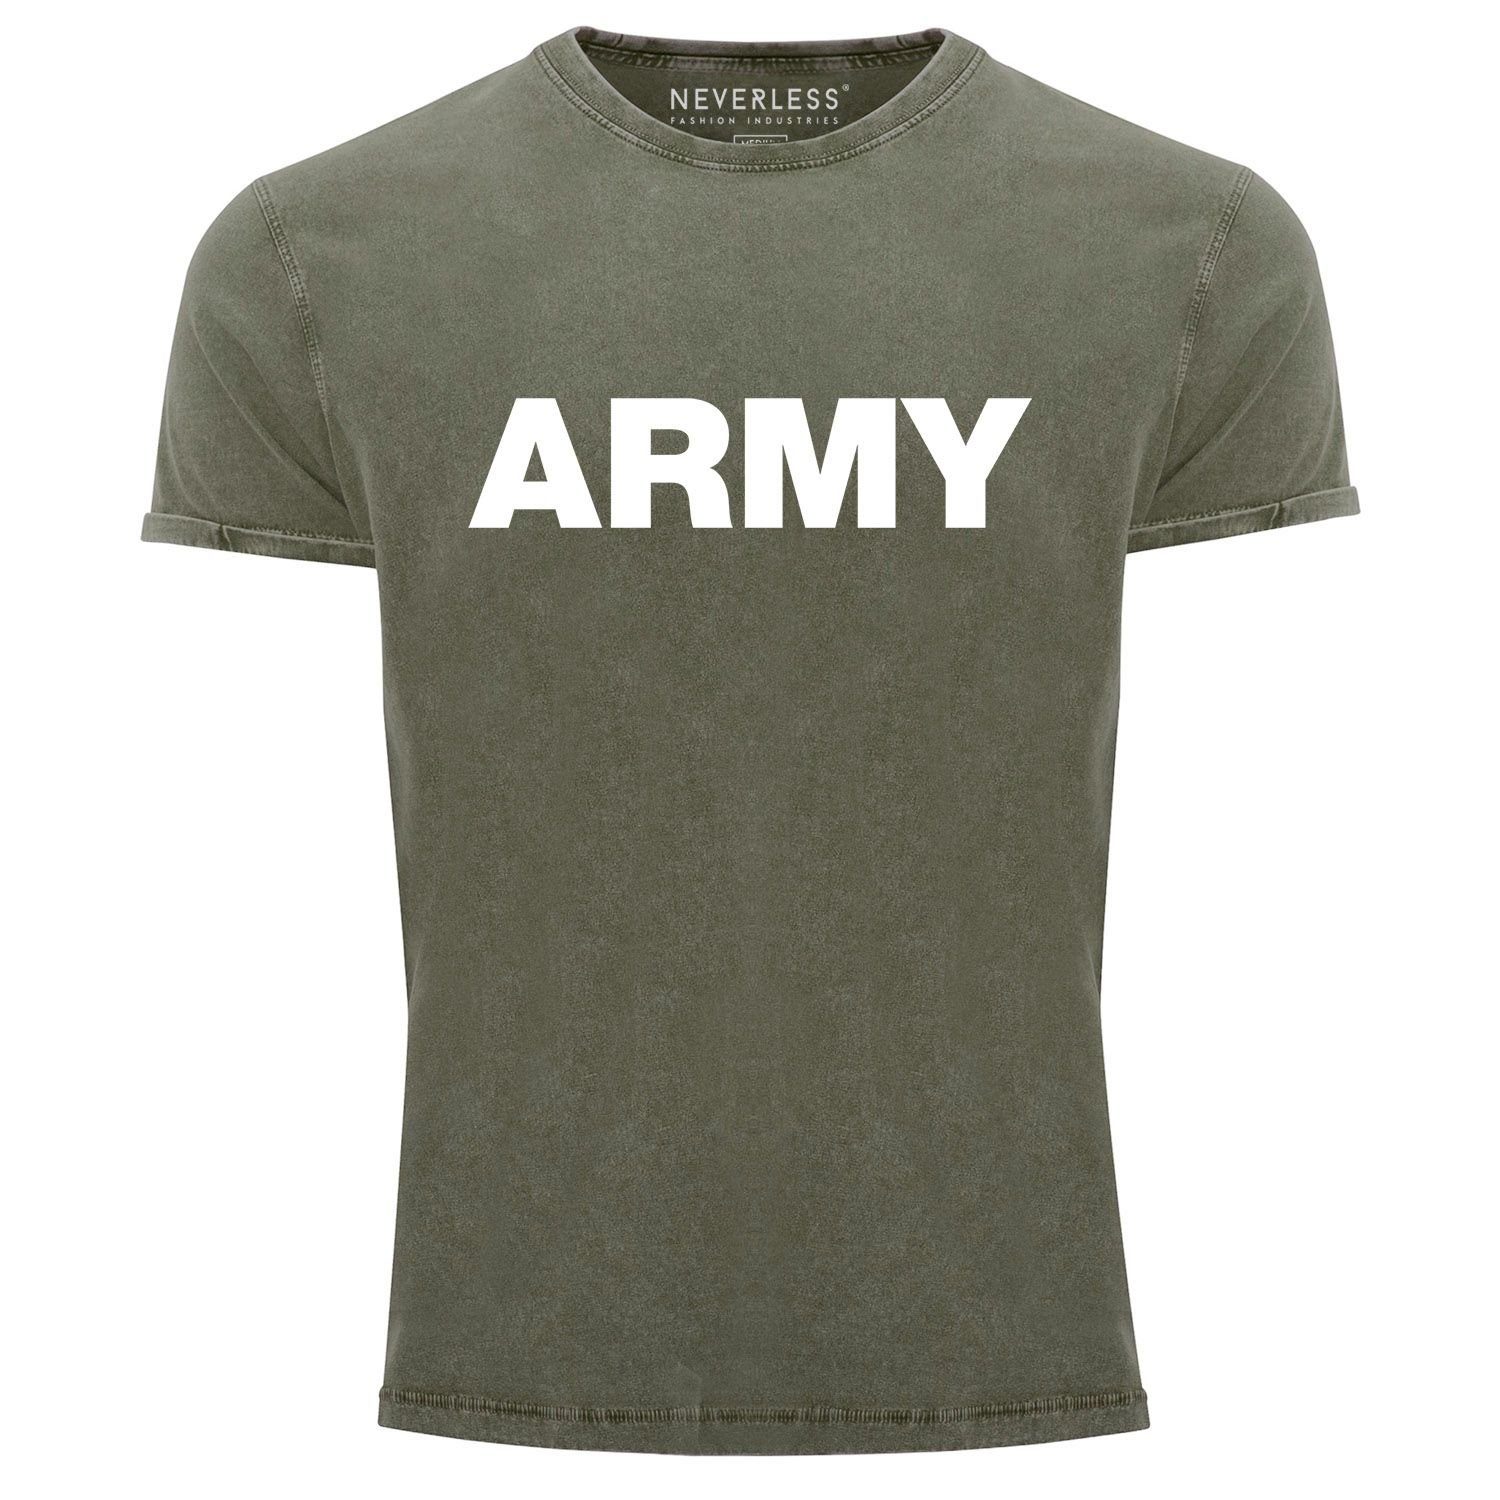 Neverless Print-Shirt Herren Vintage Shirt Army Printshirt T-Shirt Used Look Slim Fit Neverless® mit Print oliv